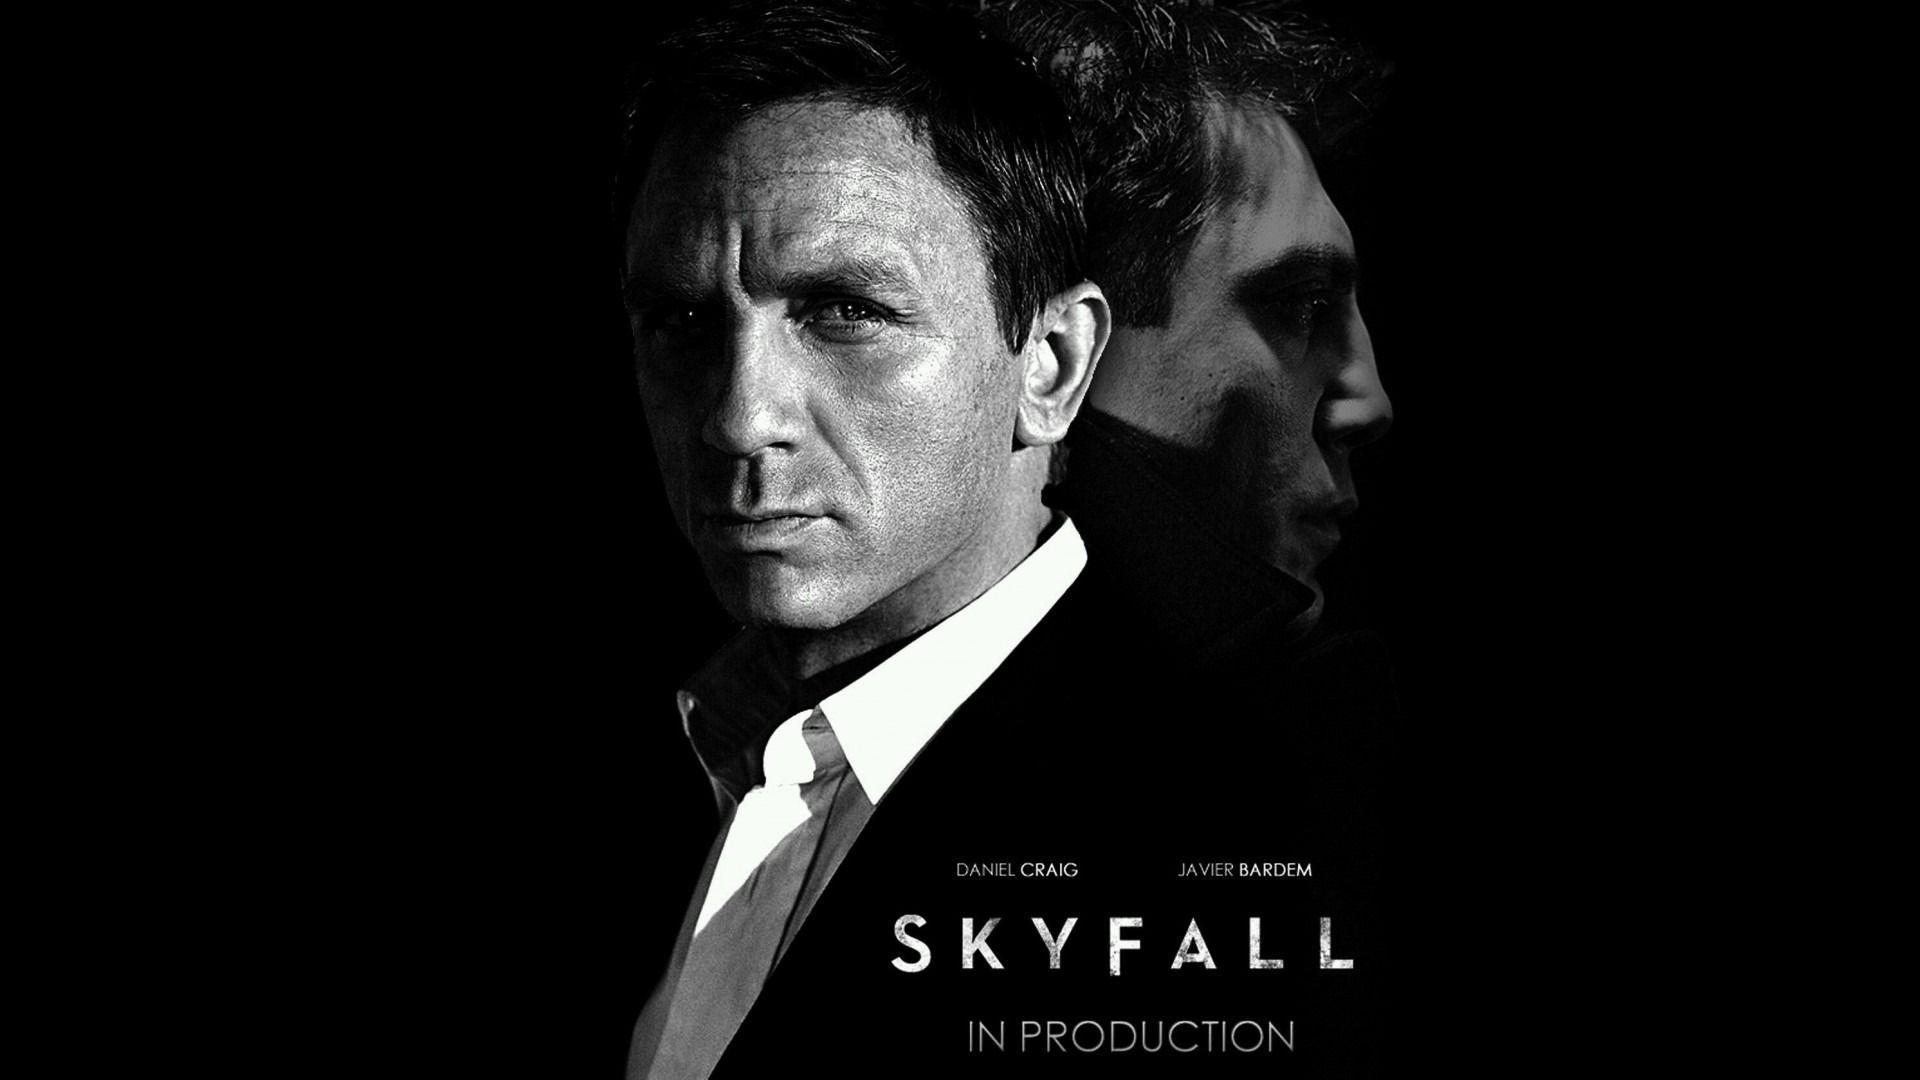 Skyfall Movies HD Wallpaper 1080p Imageize:1920x1080. HD